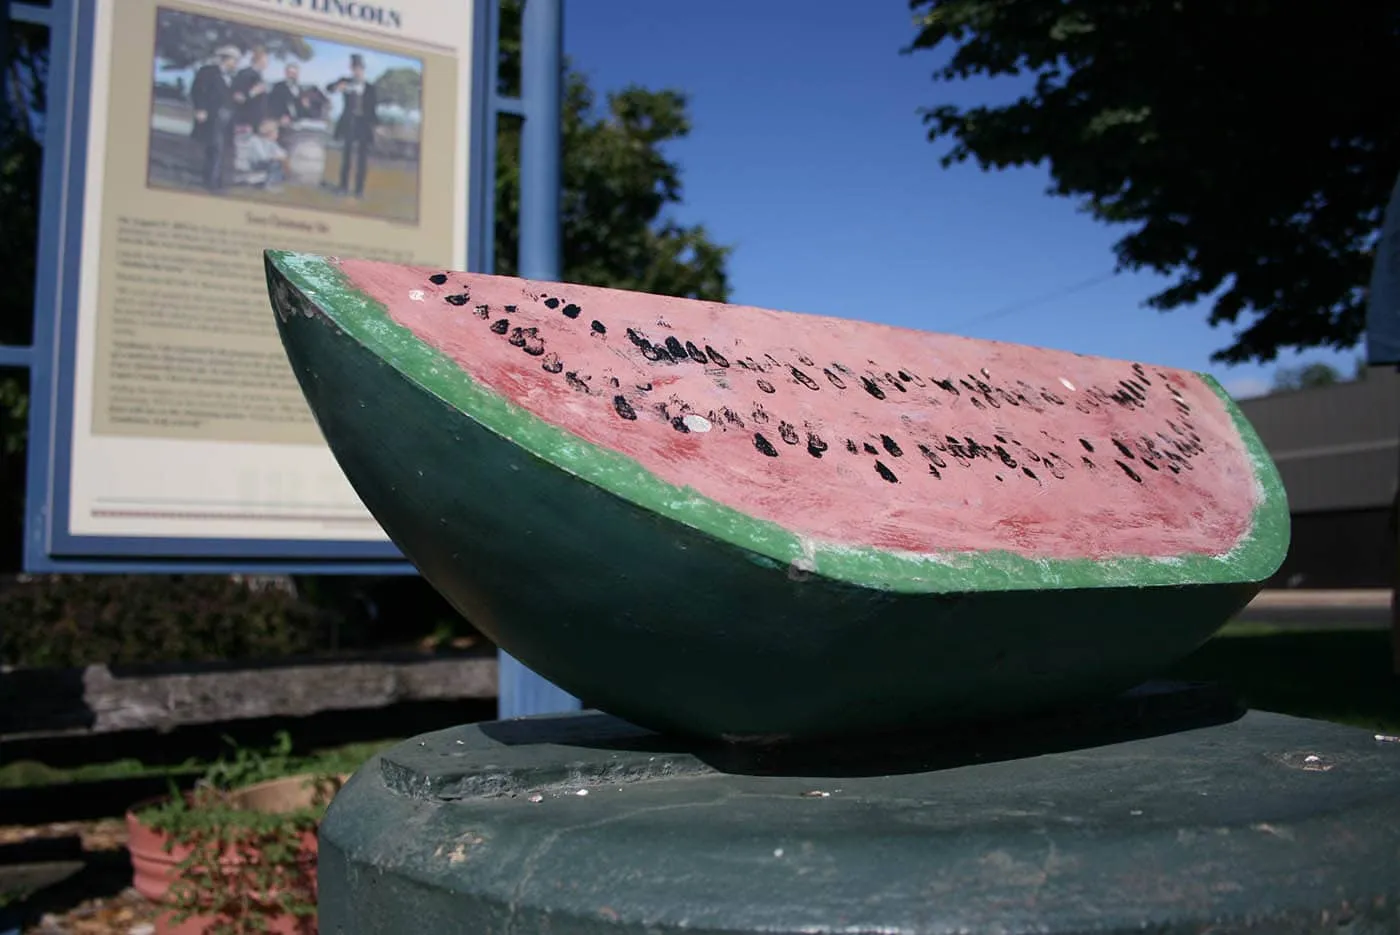 Abraham Lincoln Watermelon Monument in Lincoln, Illinois